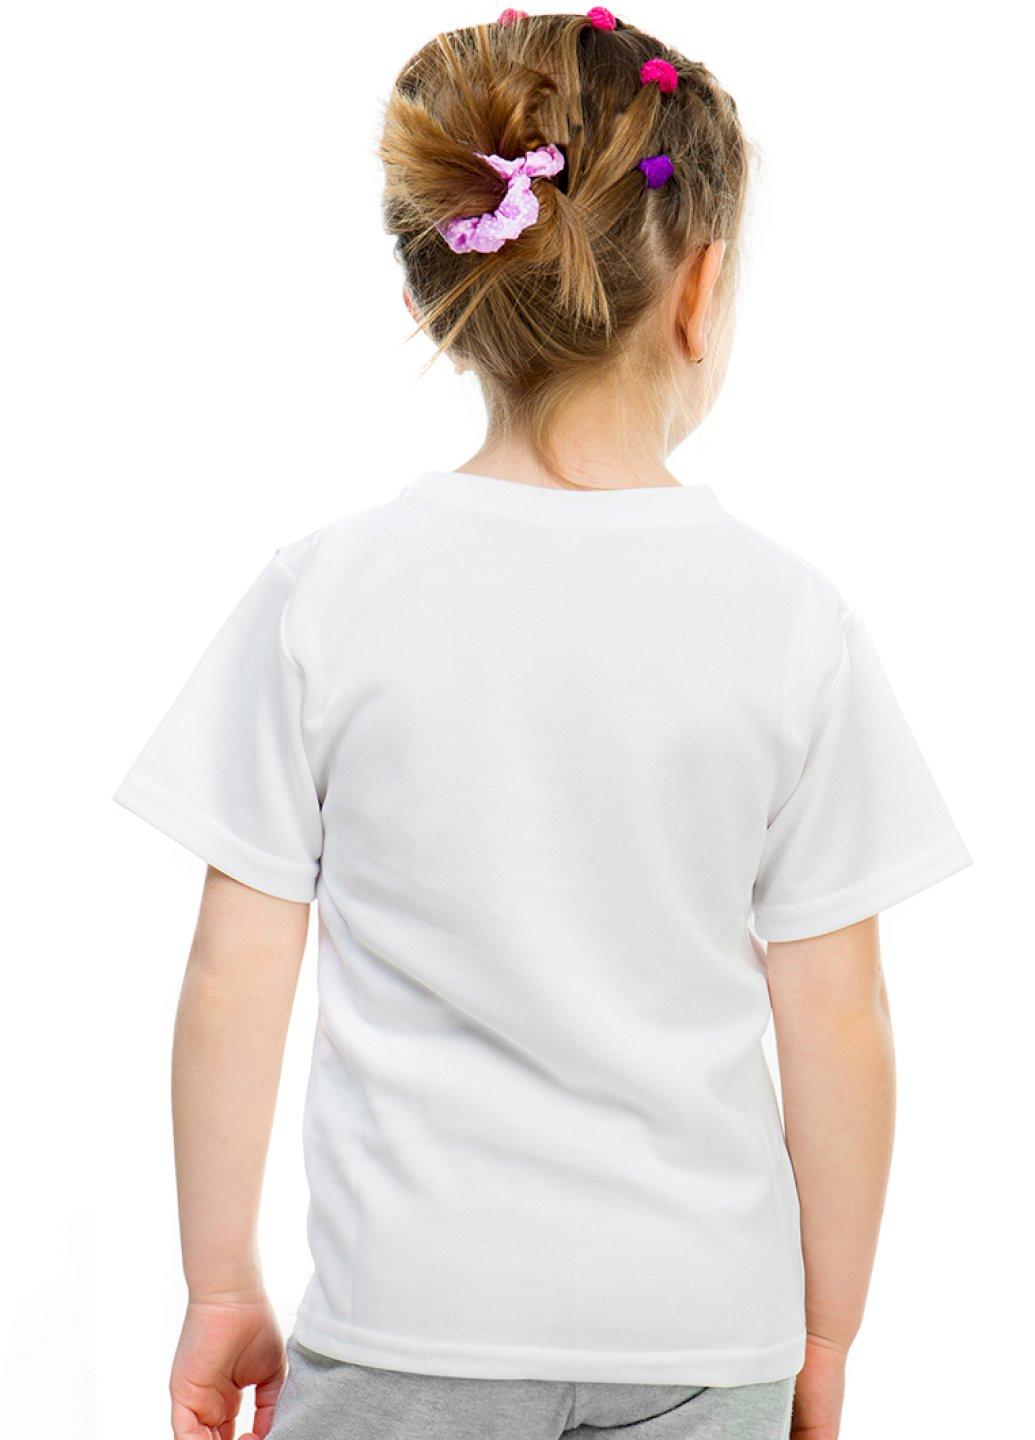 Біла демісезонна футболка дитяча біла "nail shapes" YAPPI